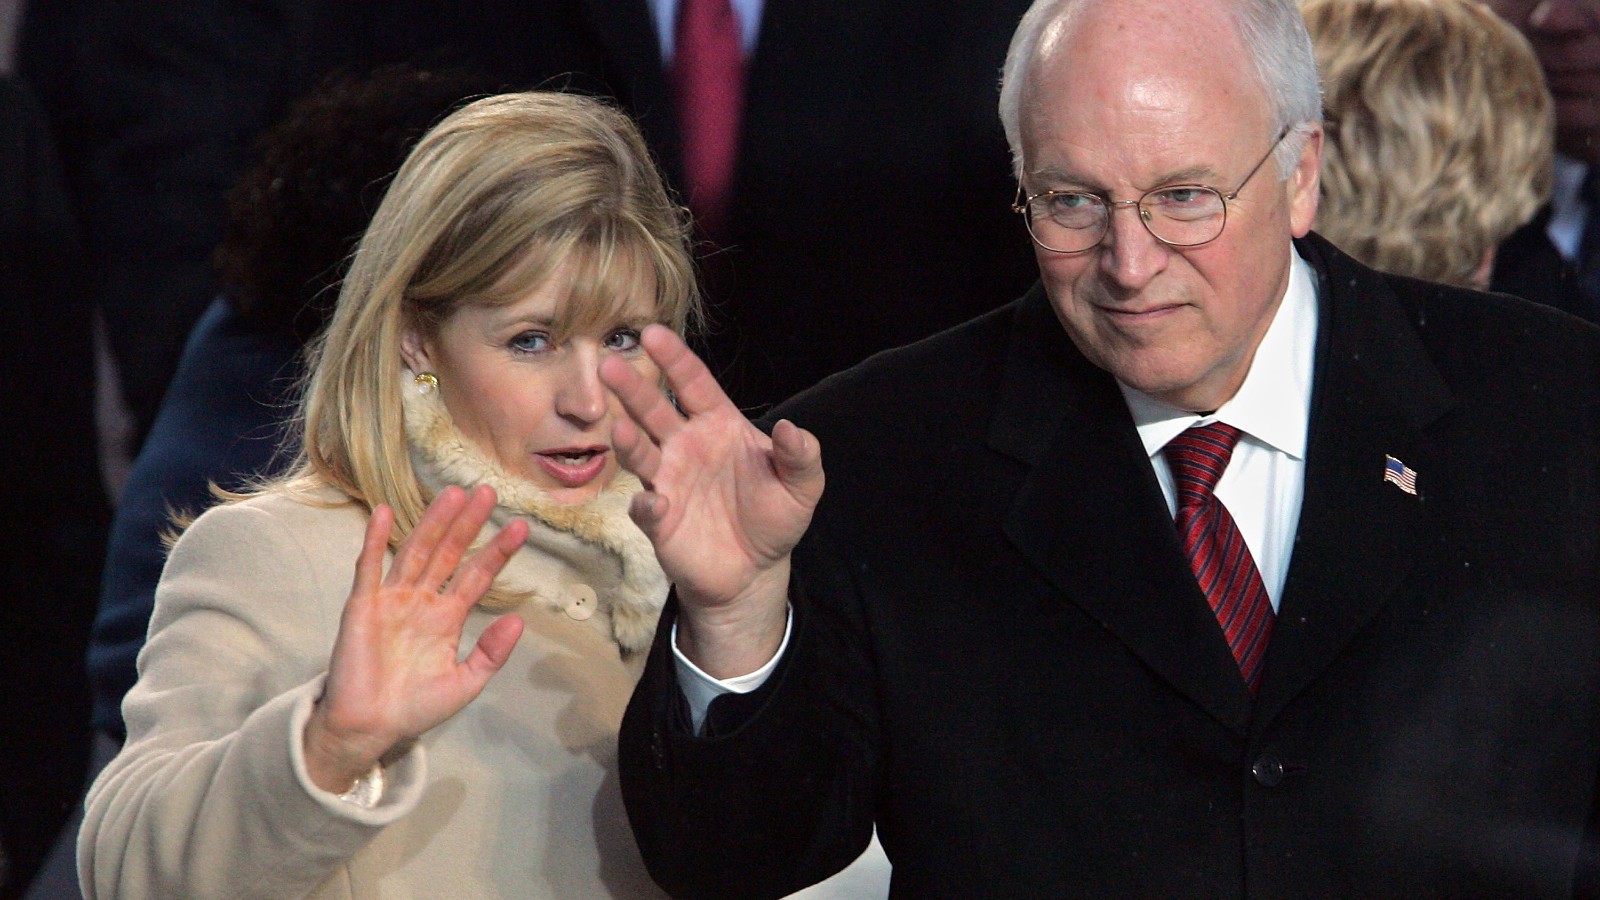 Cheney: Next President needs to restore American exceptionalism